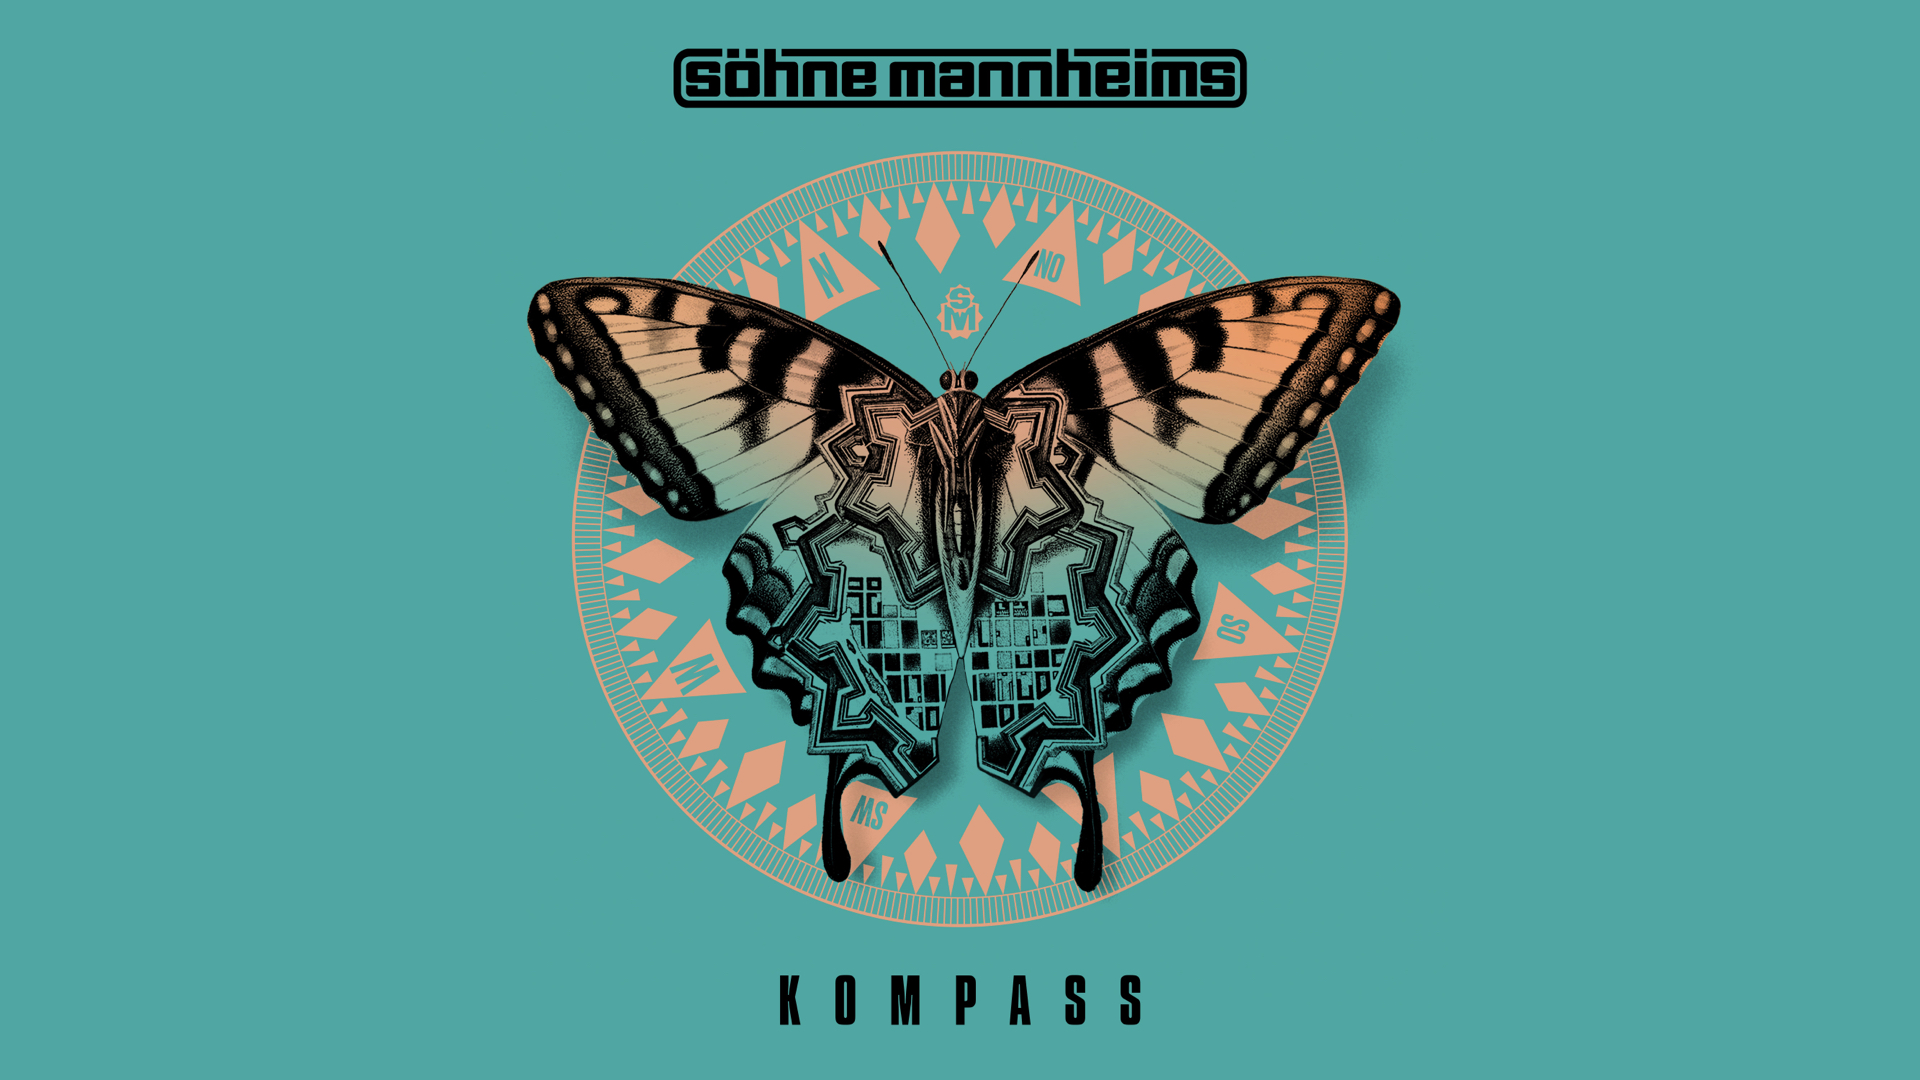 Soehne Mannheims Kompass Cover Web Header.001